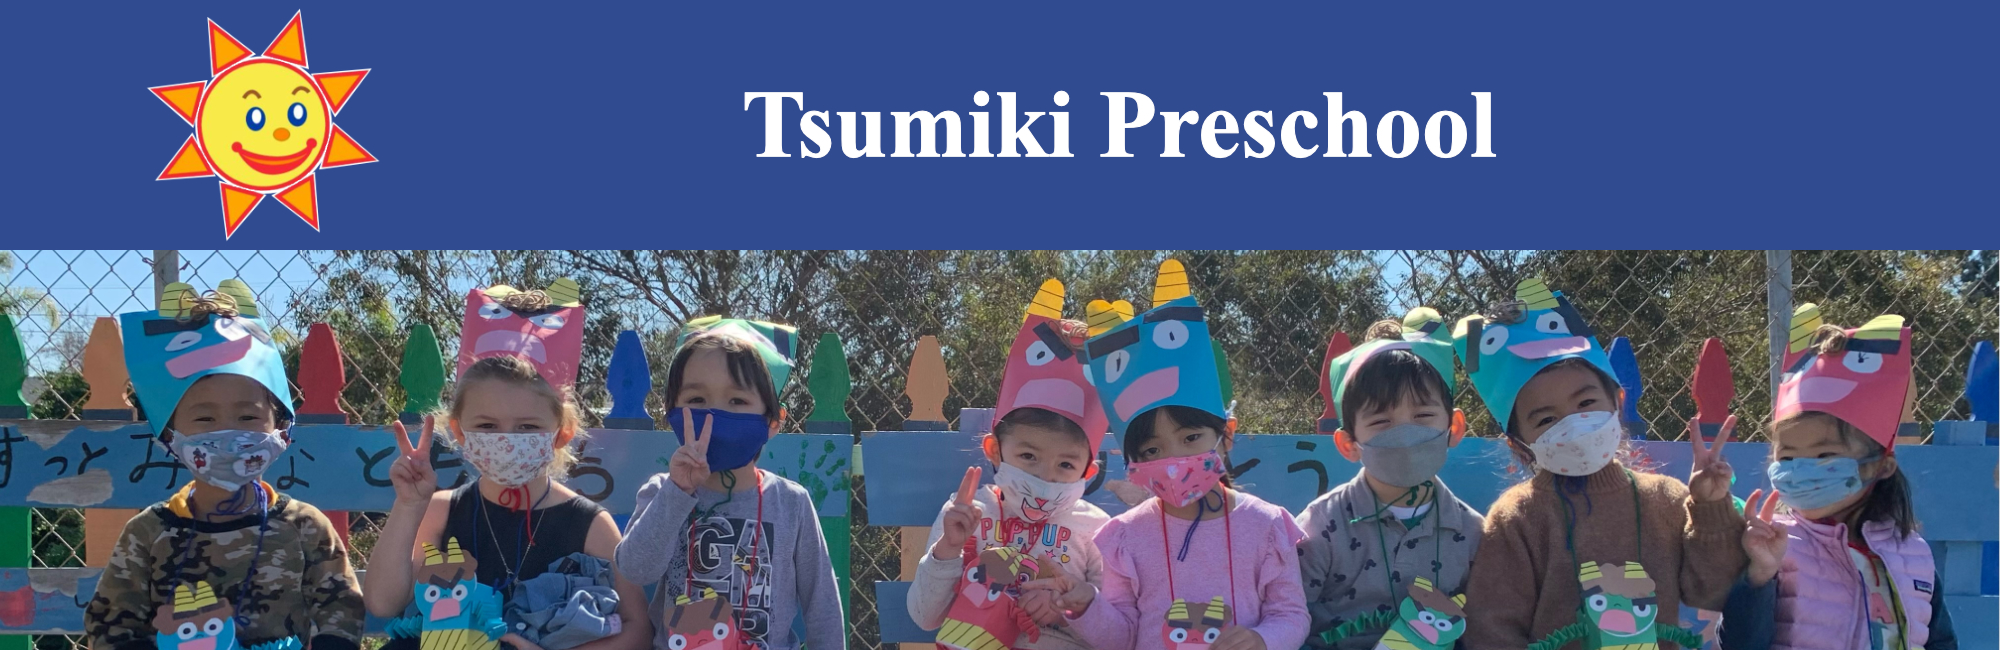 Tsumiki Preschool